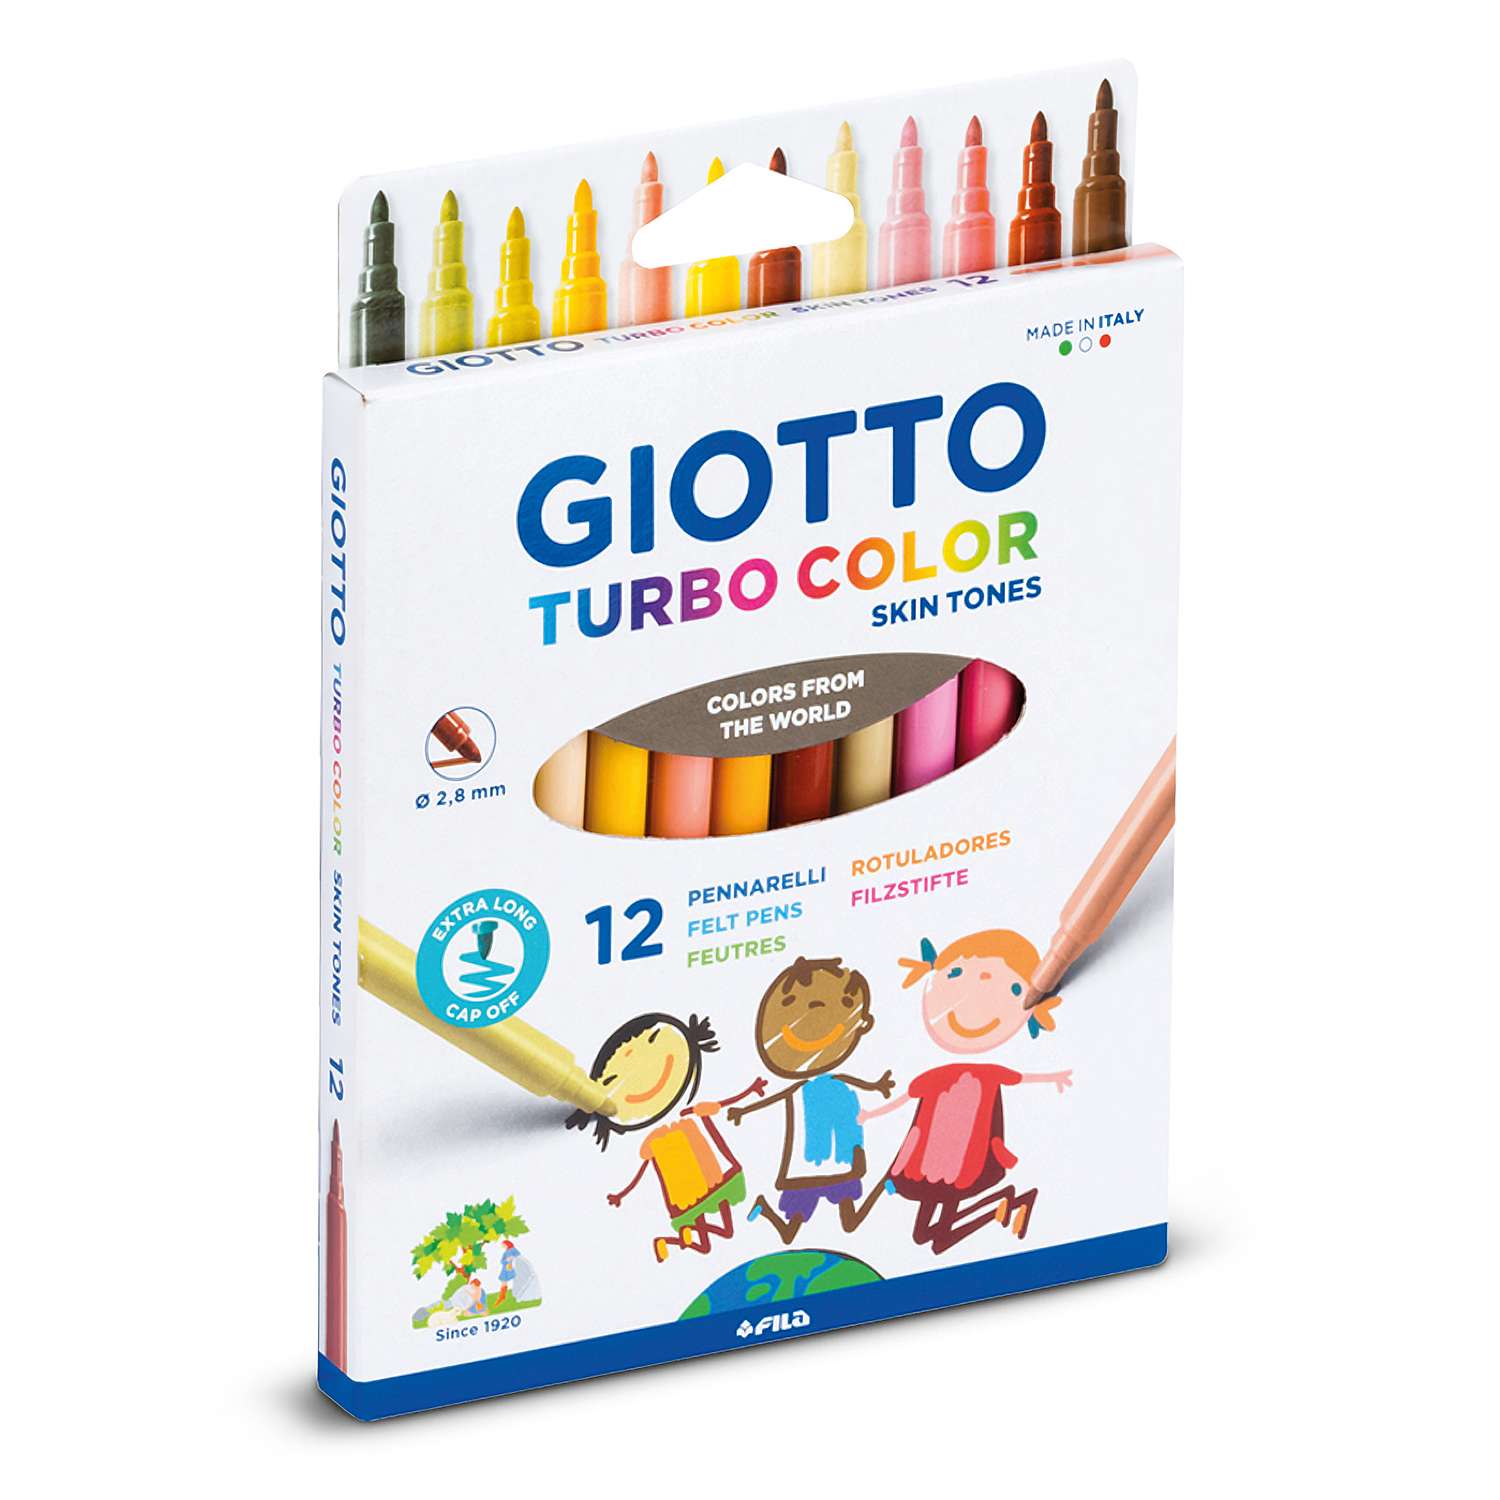 Фломастеры GIOTTO Turbo Color Skintiones 12цветов 526900 - фото 1